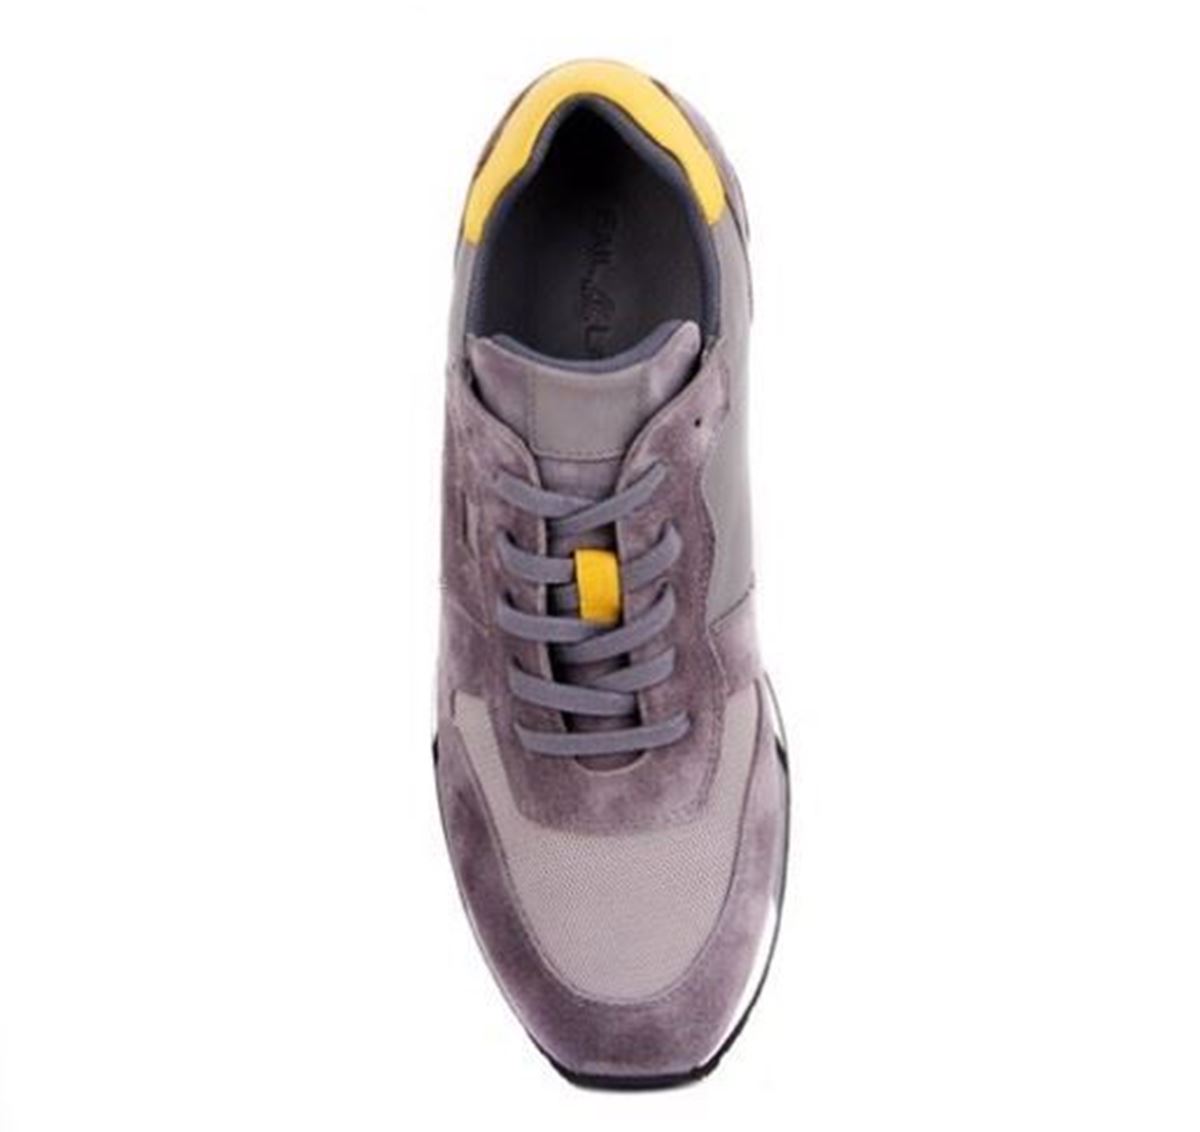 Sail Lakers - Gri Süet Erkek Deri Sneaker resmi